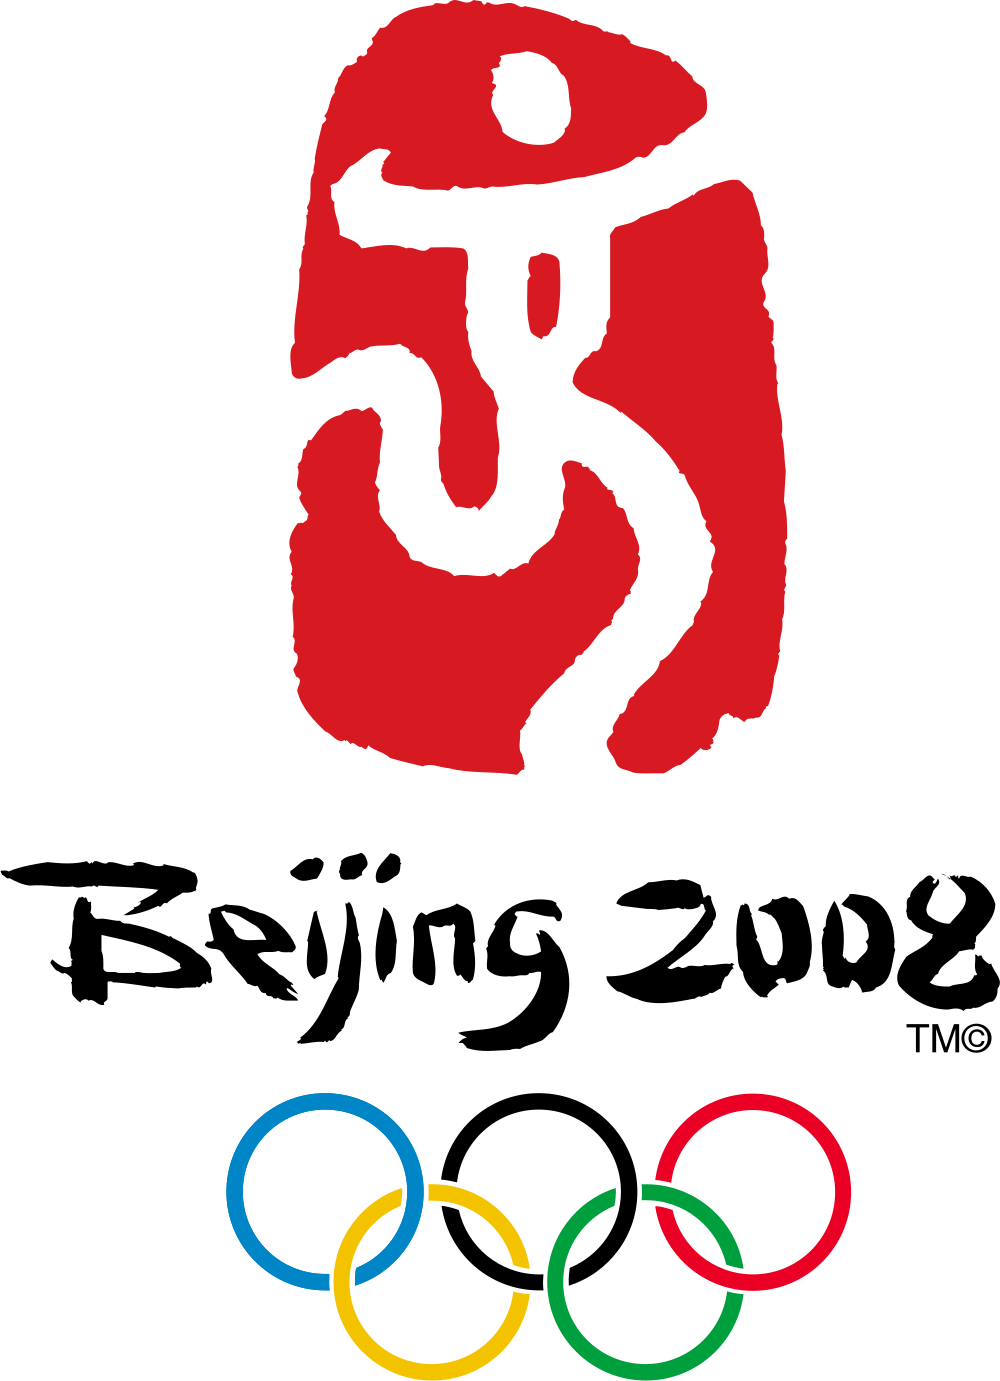 2008 Beijing Summer Olympics logo png transparent